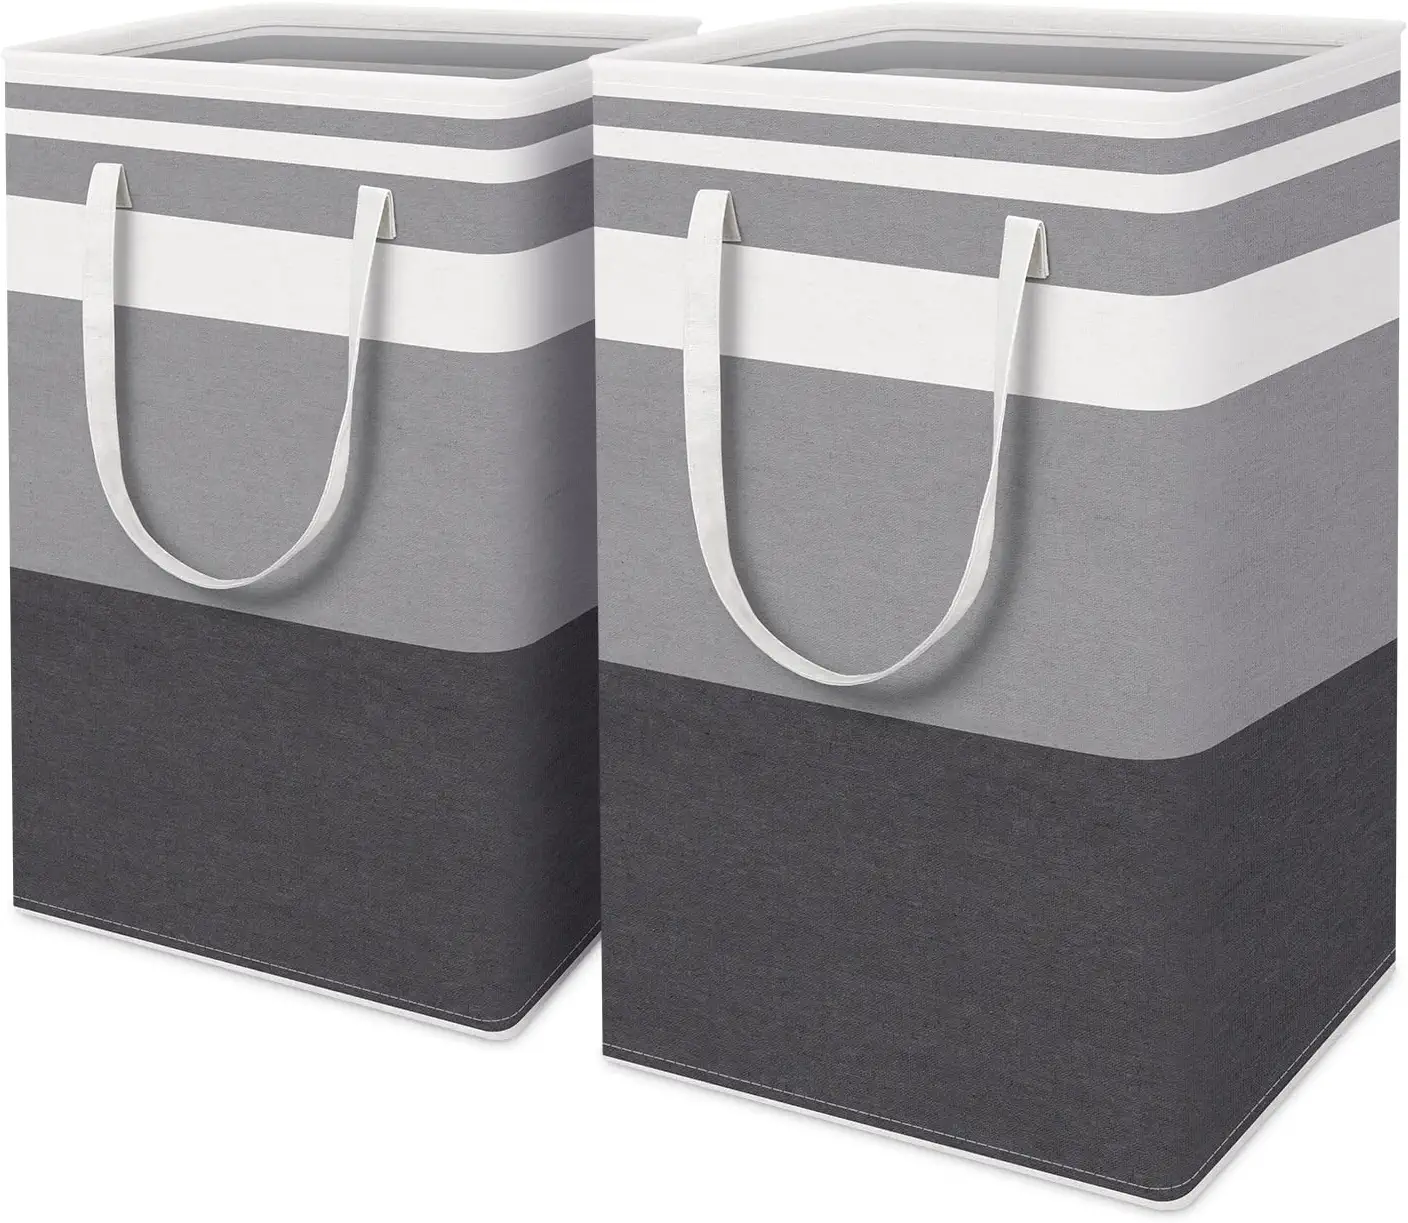 HomeHacks Foldable Cotton Laundry Baskets, 2-Pack